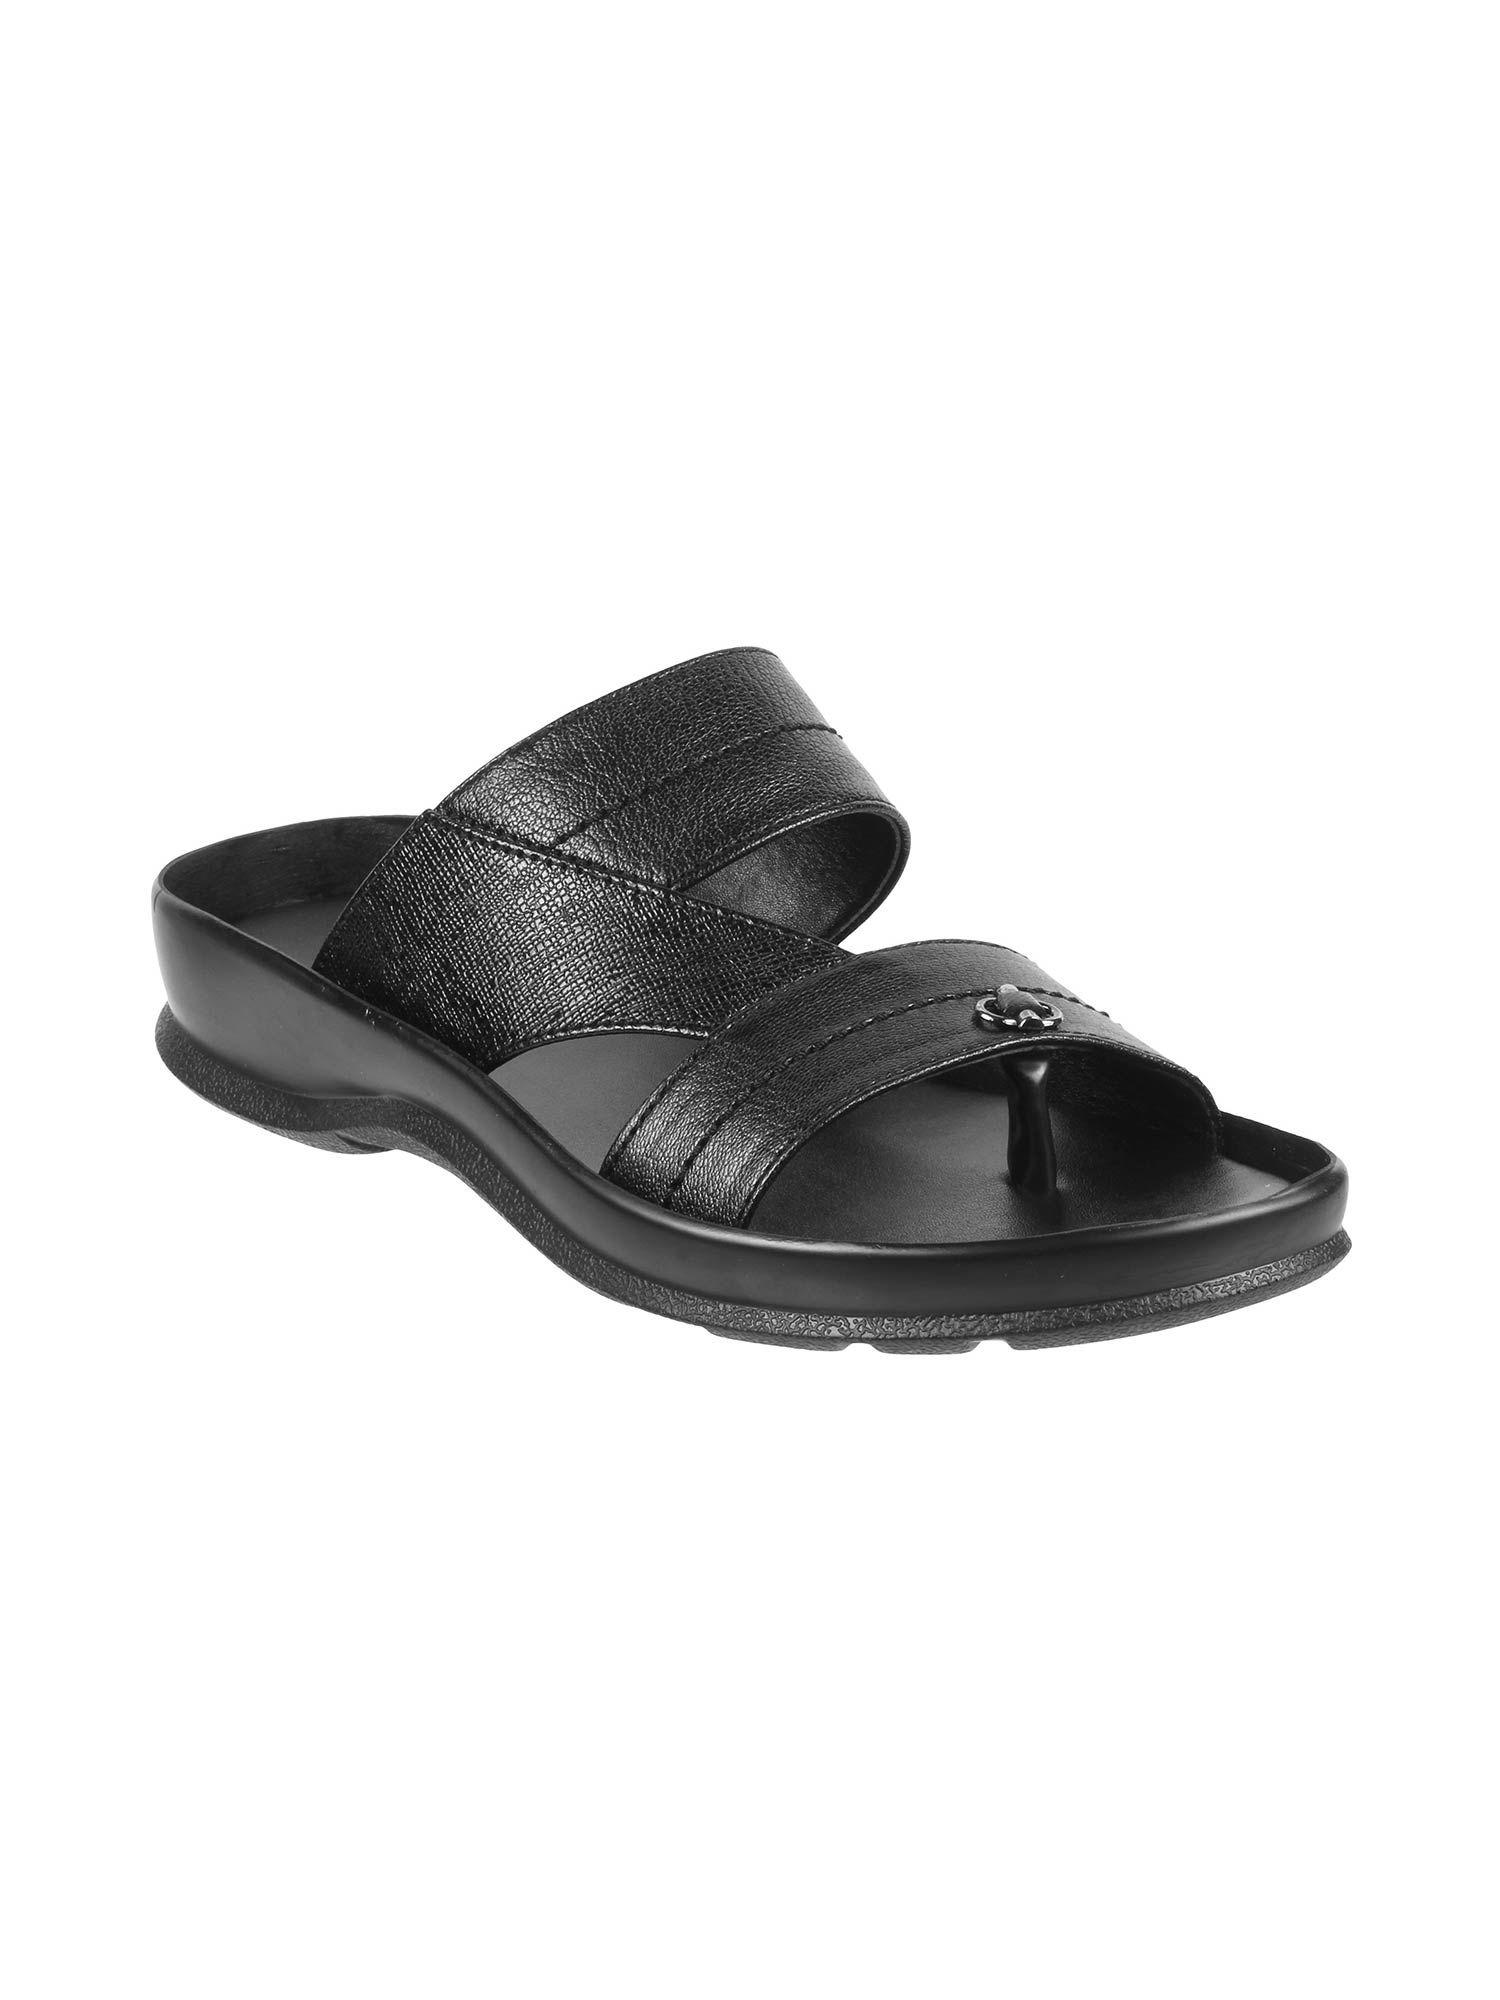 mens-black-flat-chappalsmetro-textured-black-sandals